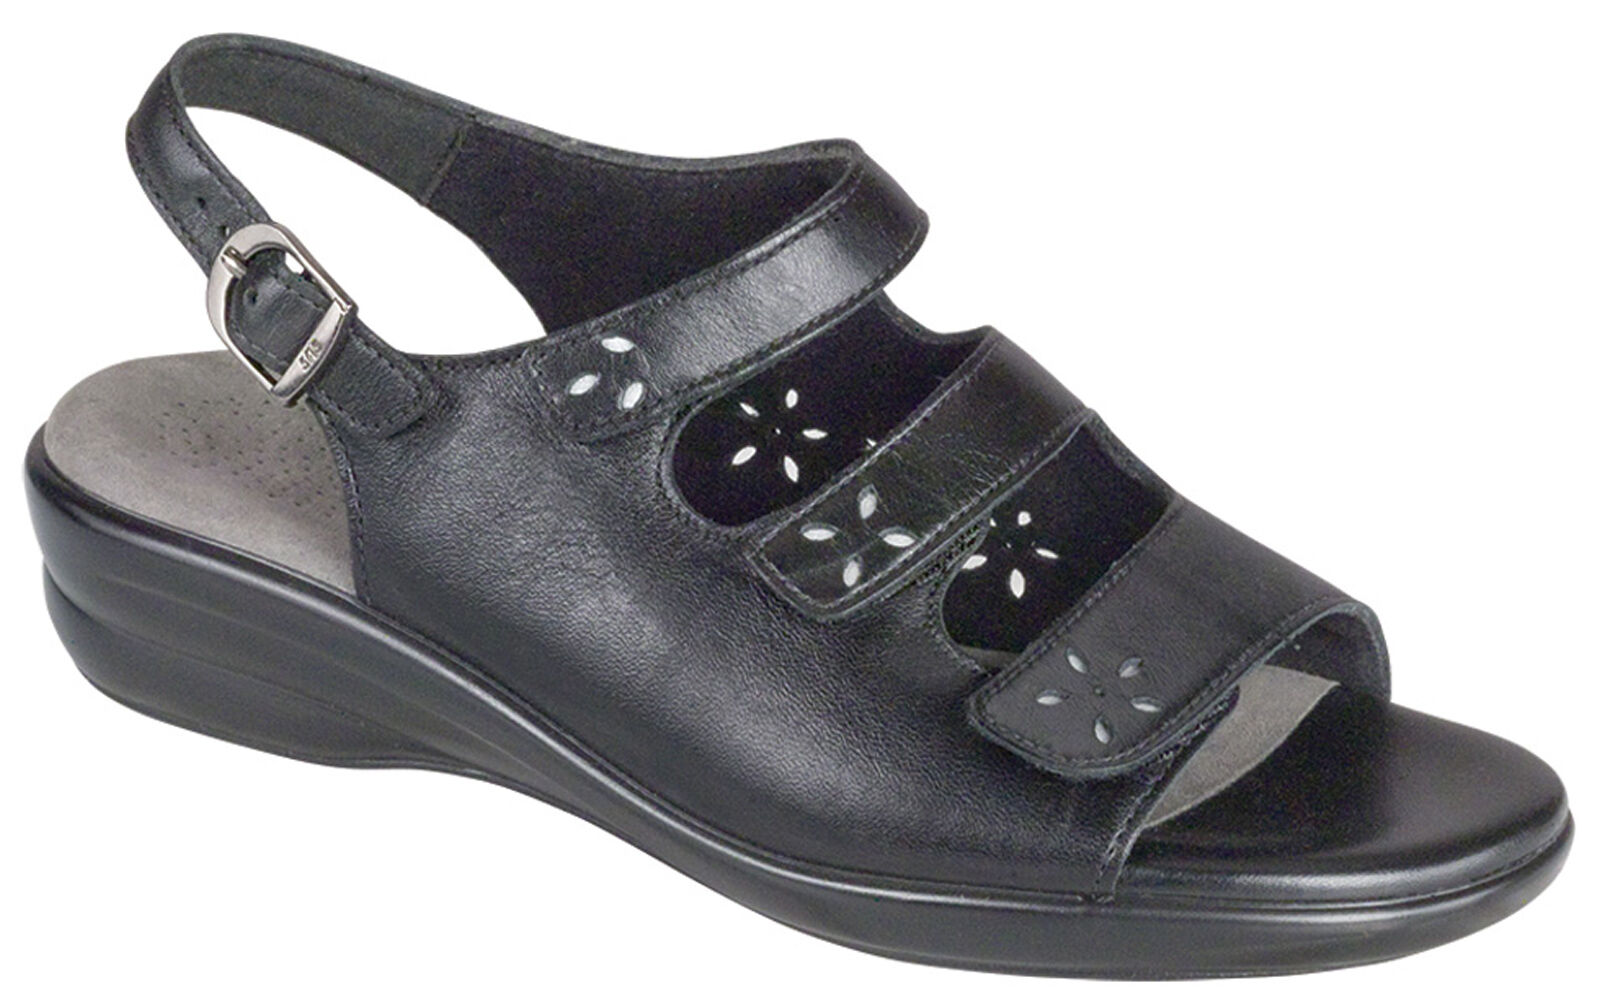 sas shoes with velcro straps